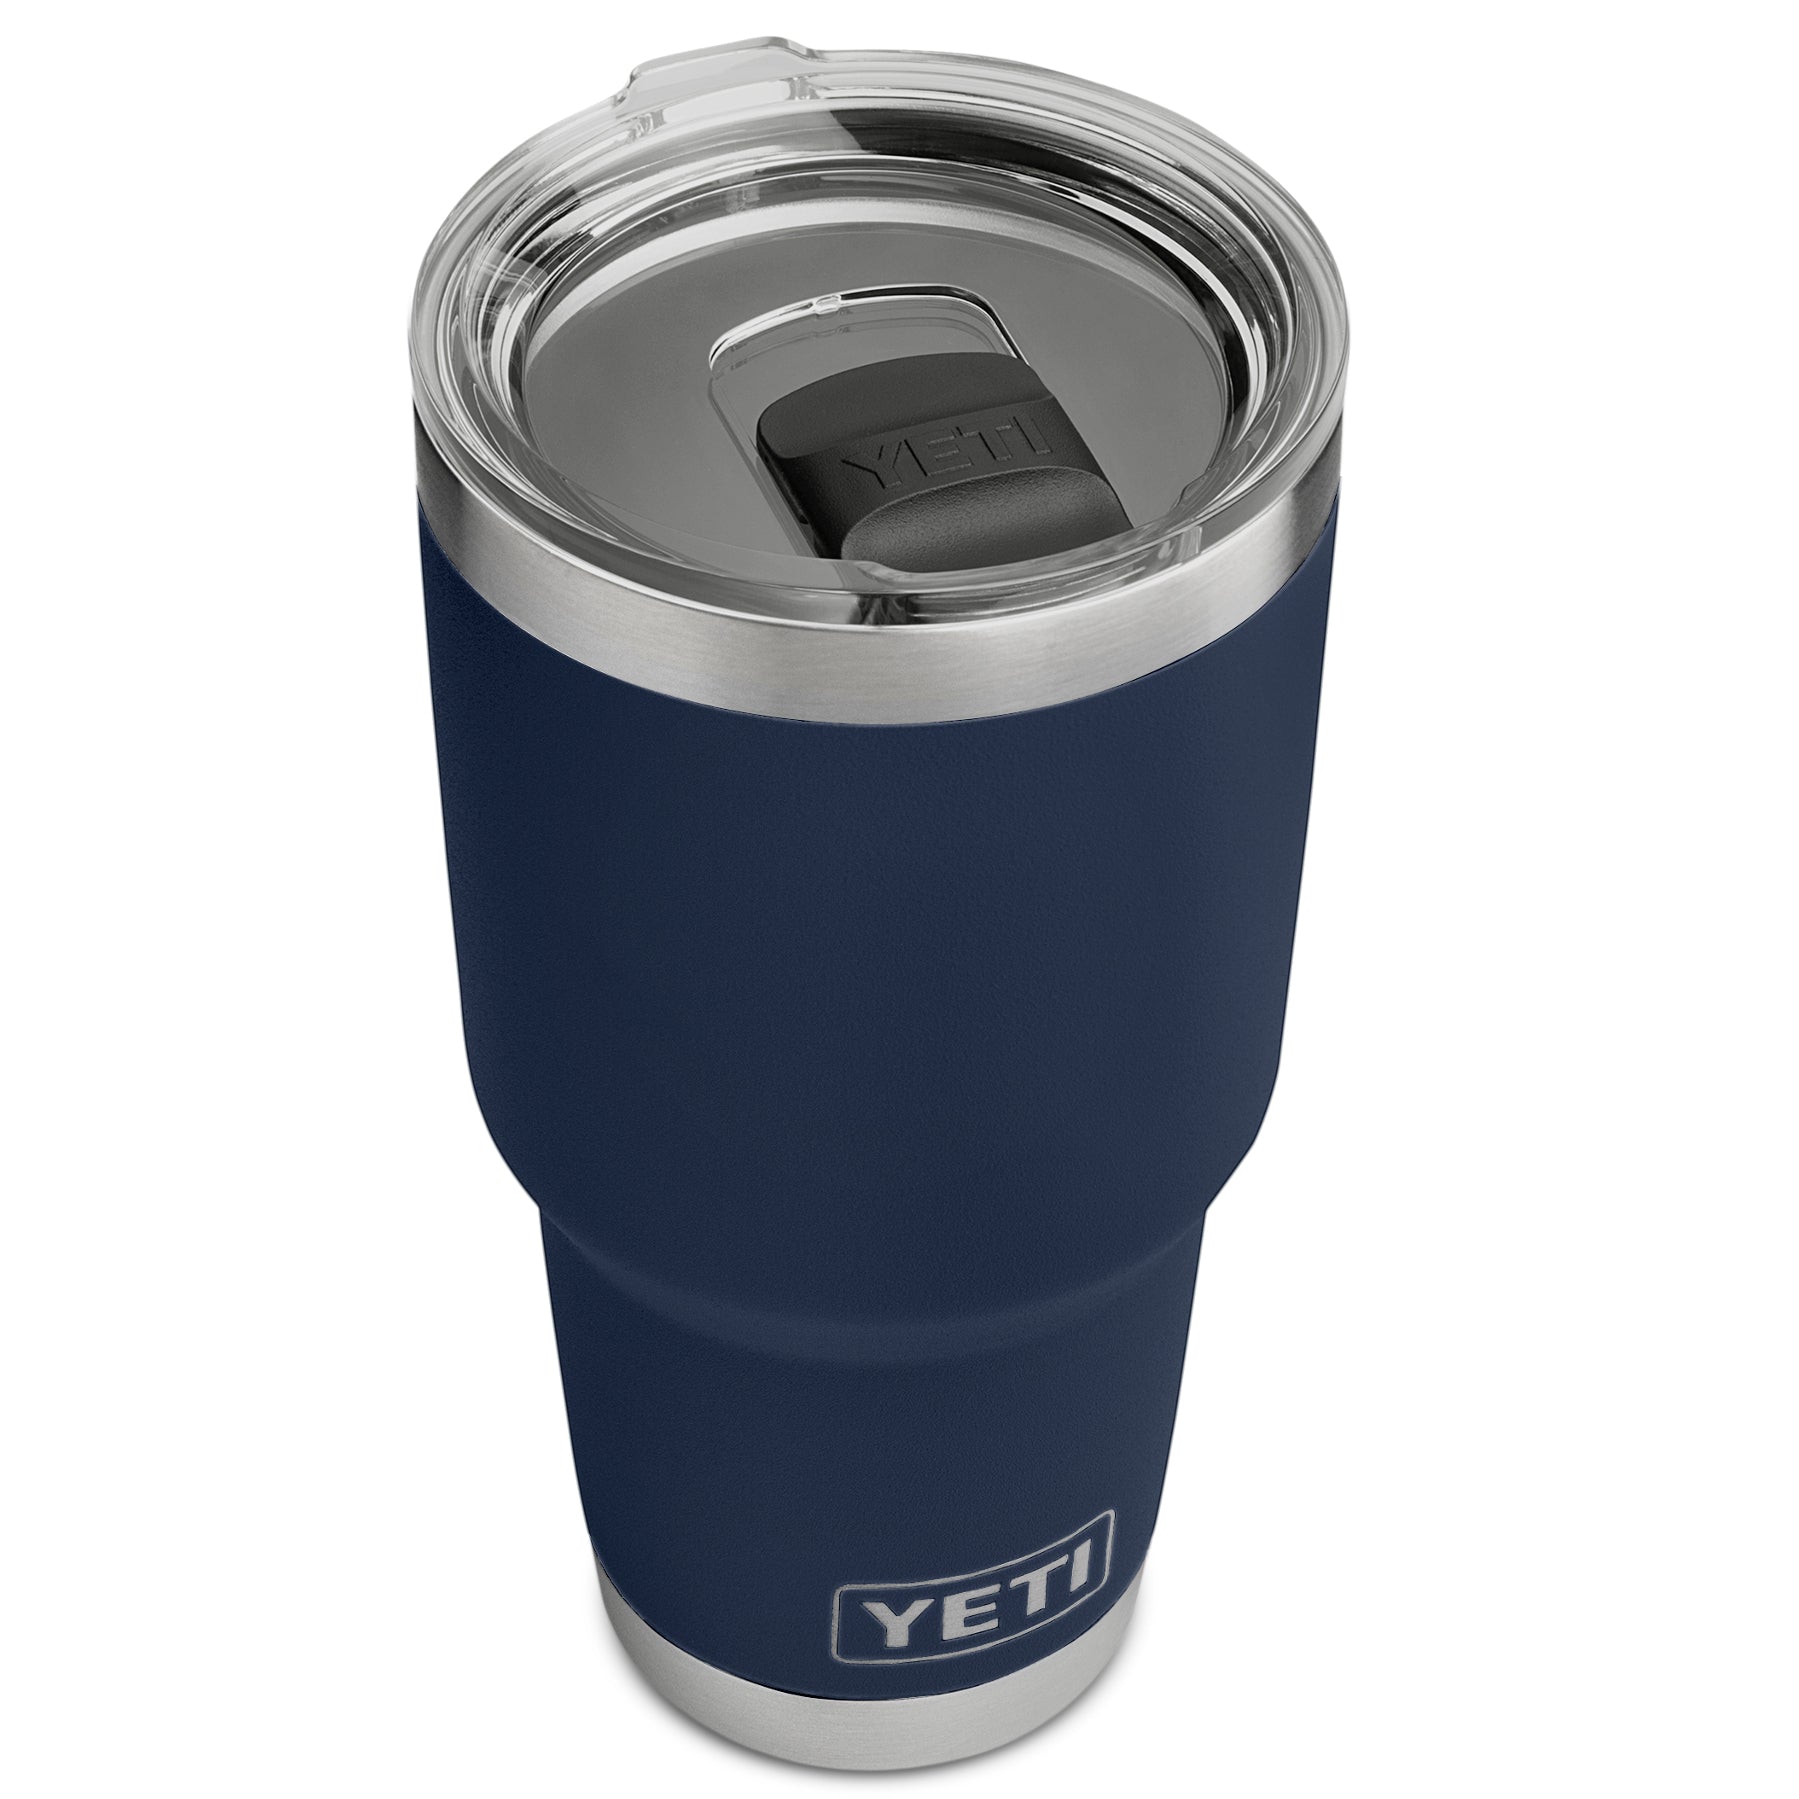 30 oz Tumbler Lid for YETI Rambler Magnetic Slider Lid Splash Resistant  Replacement Lid for 30 oz Tumbler, 14 oz Mug and 35 oz Straw Mug, Ozark  Trail